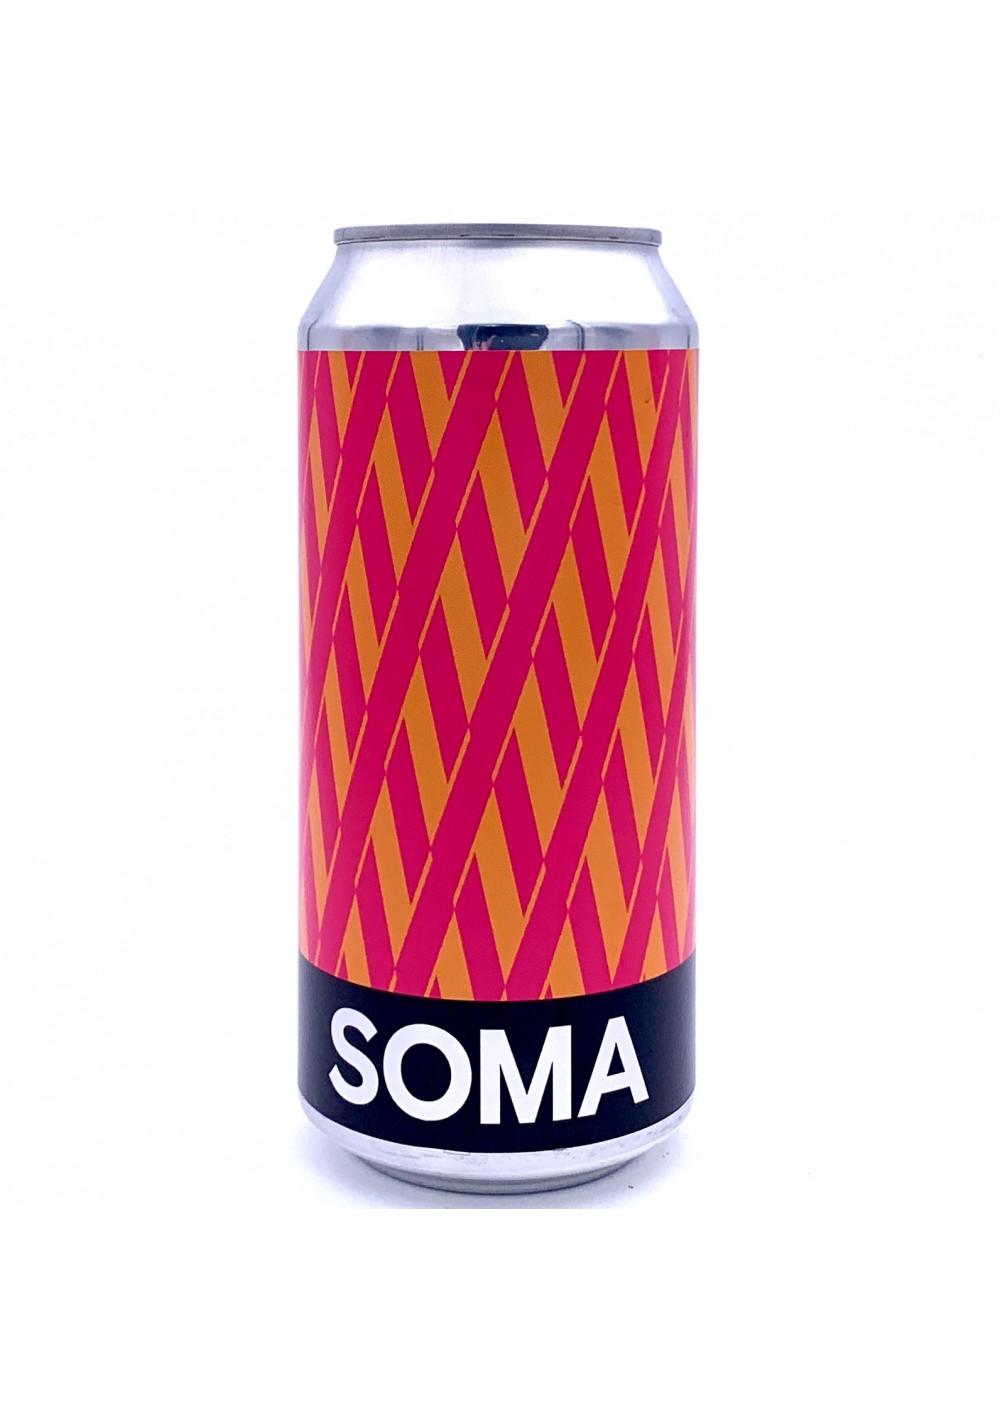 SOMA - Daily Reset - New England TRIPLE IPA